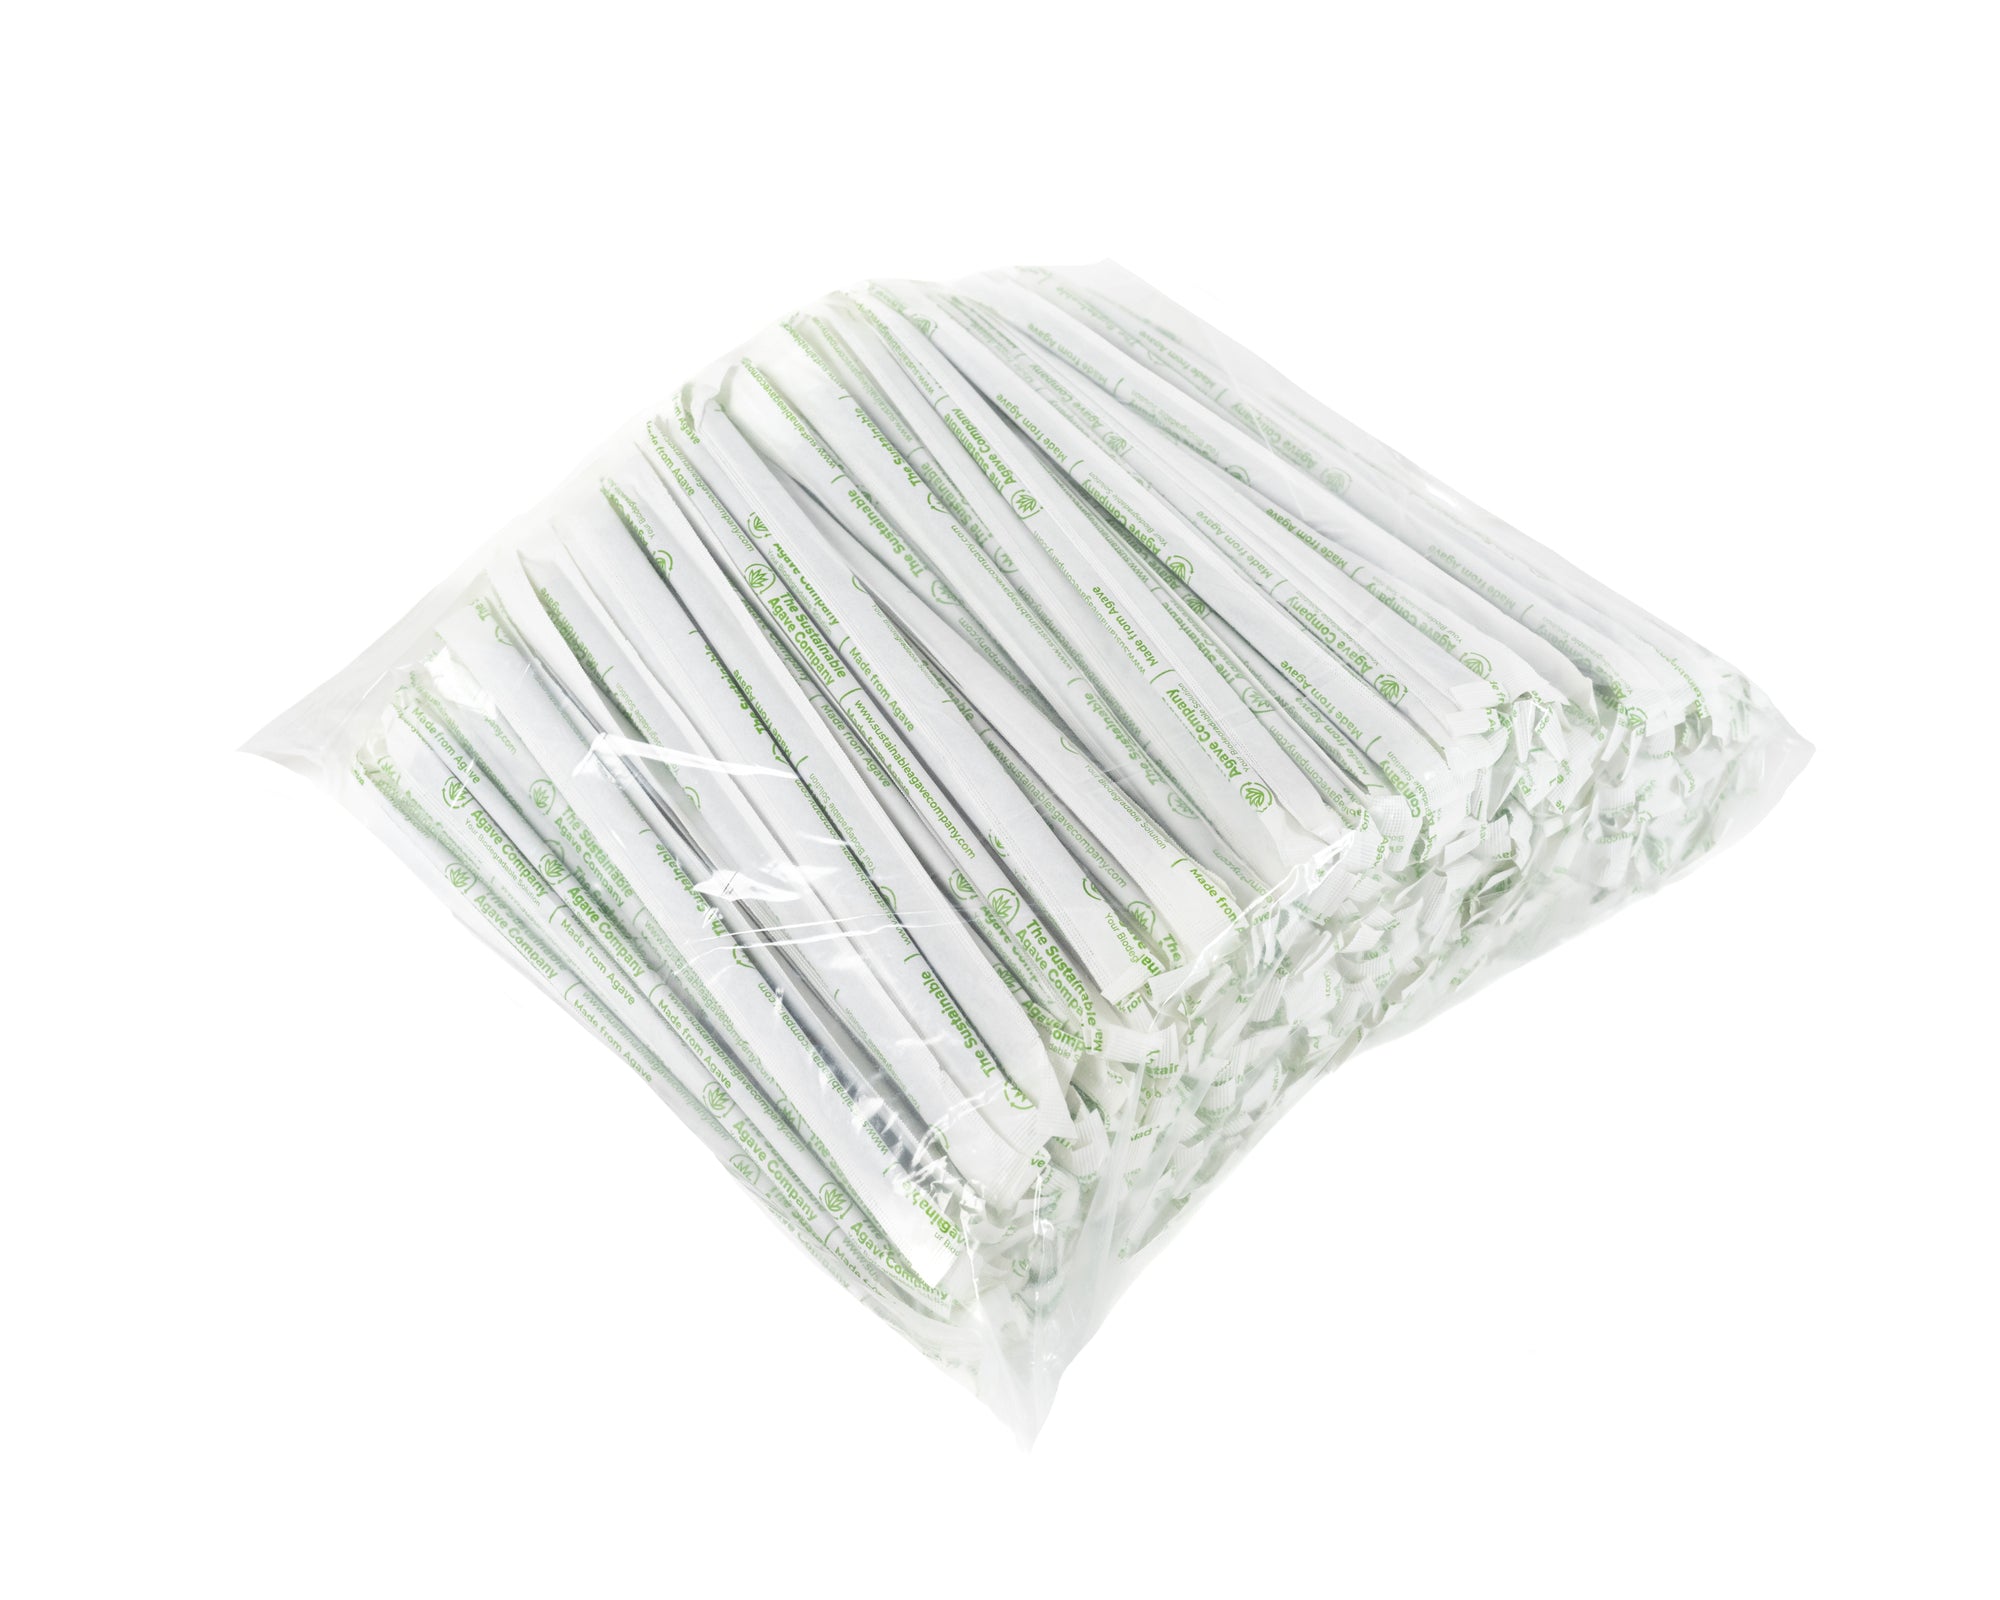 Sustainable Agave-Based Straws